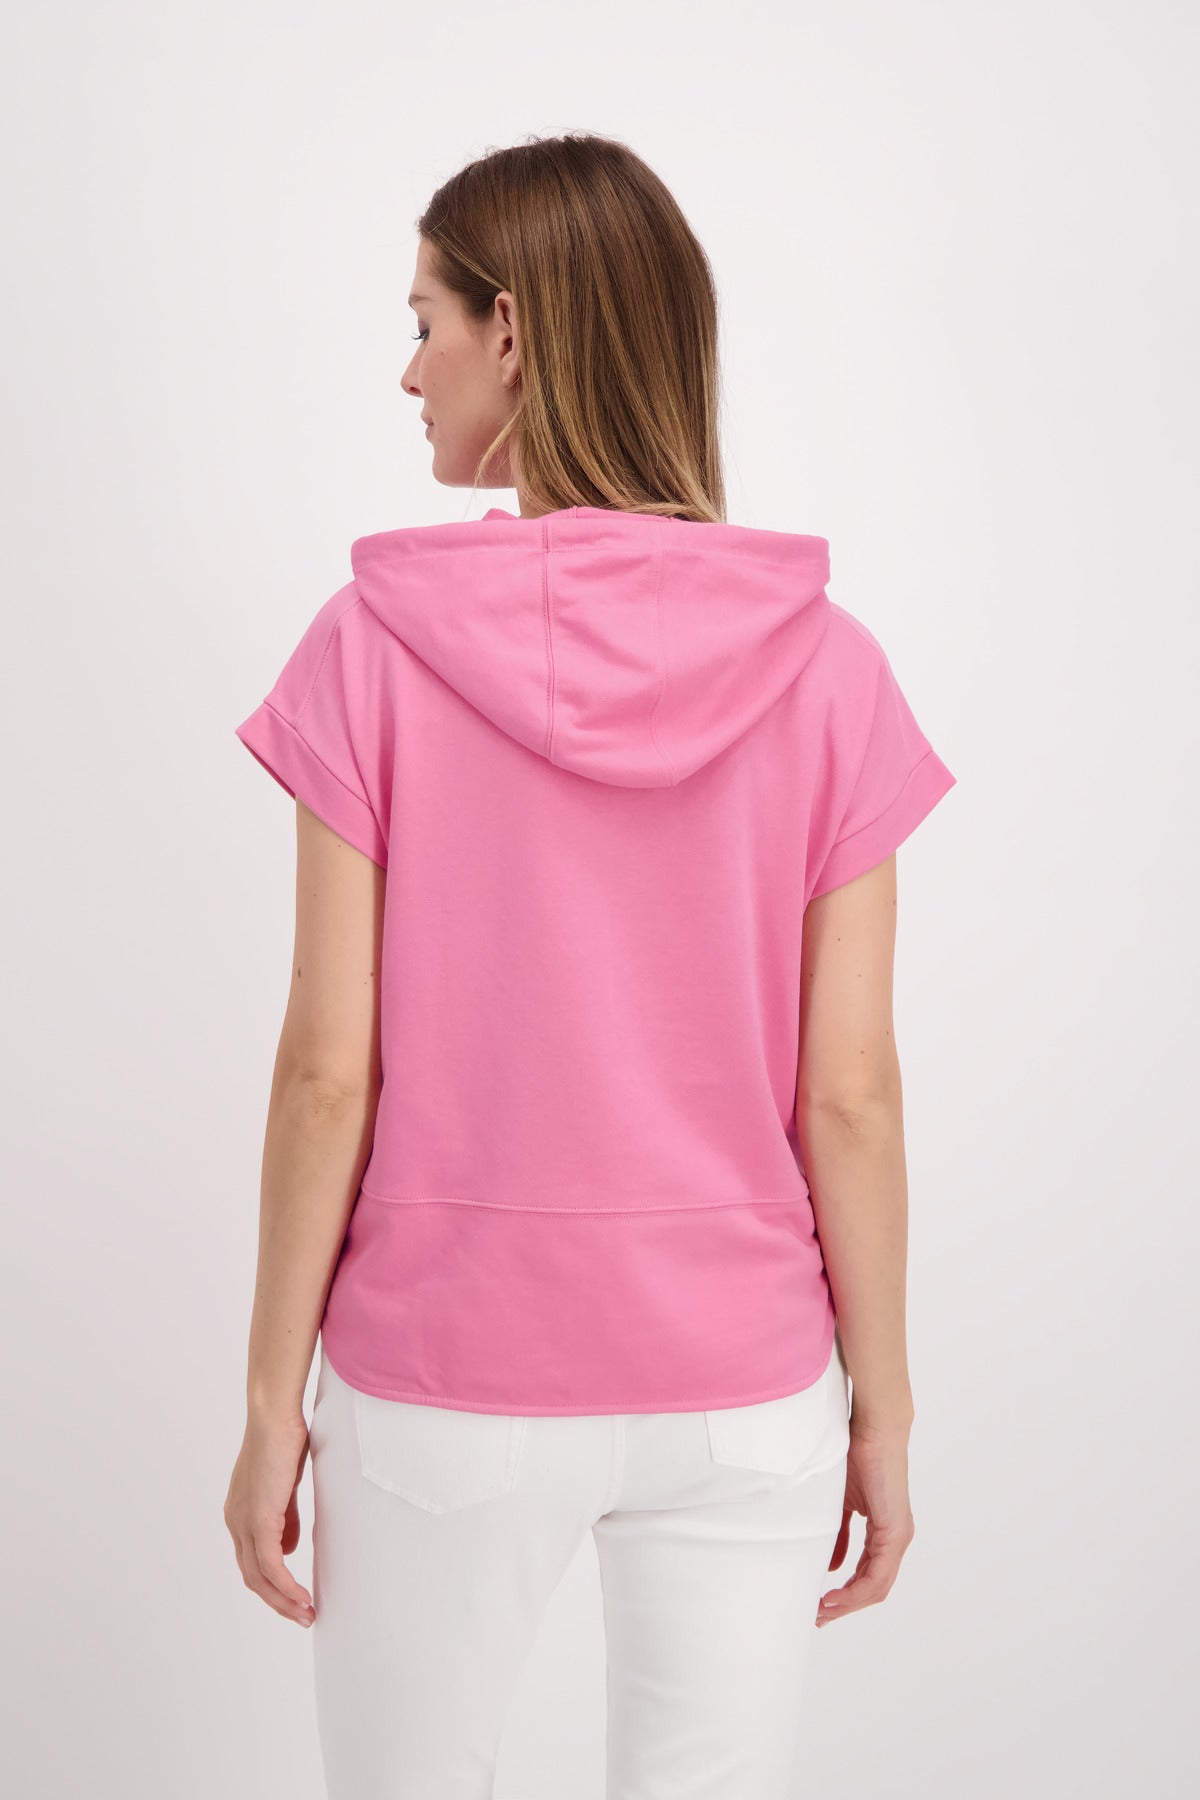 Shirt, pink